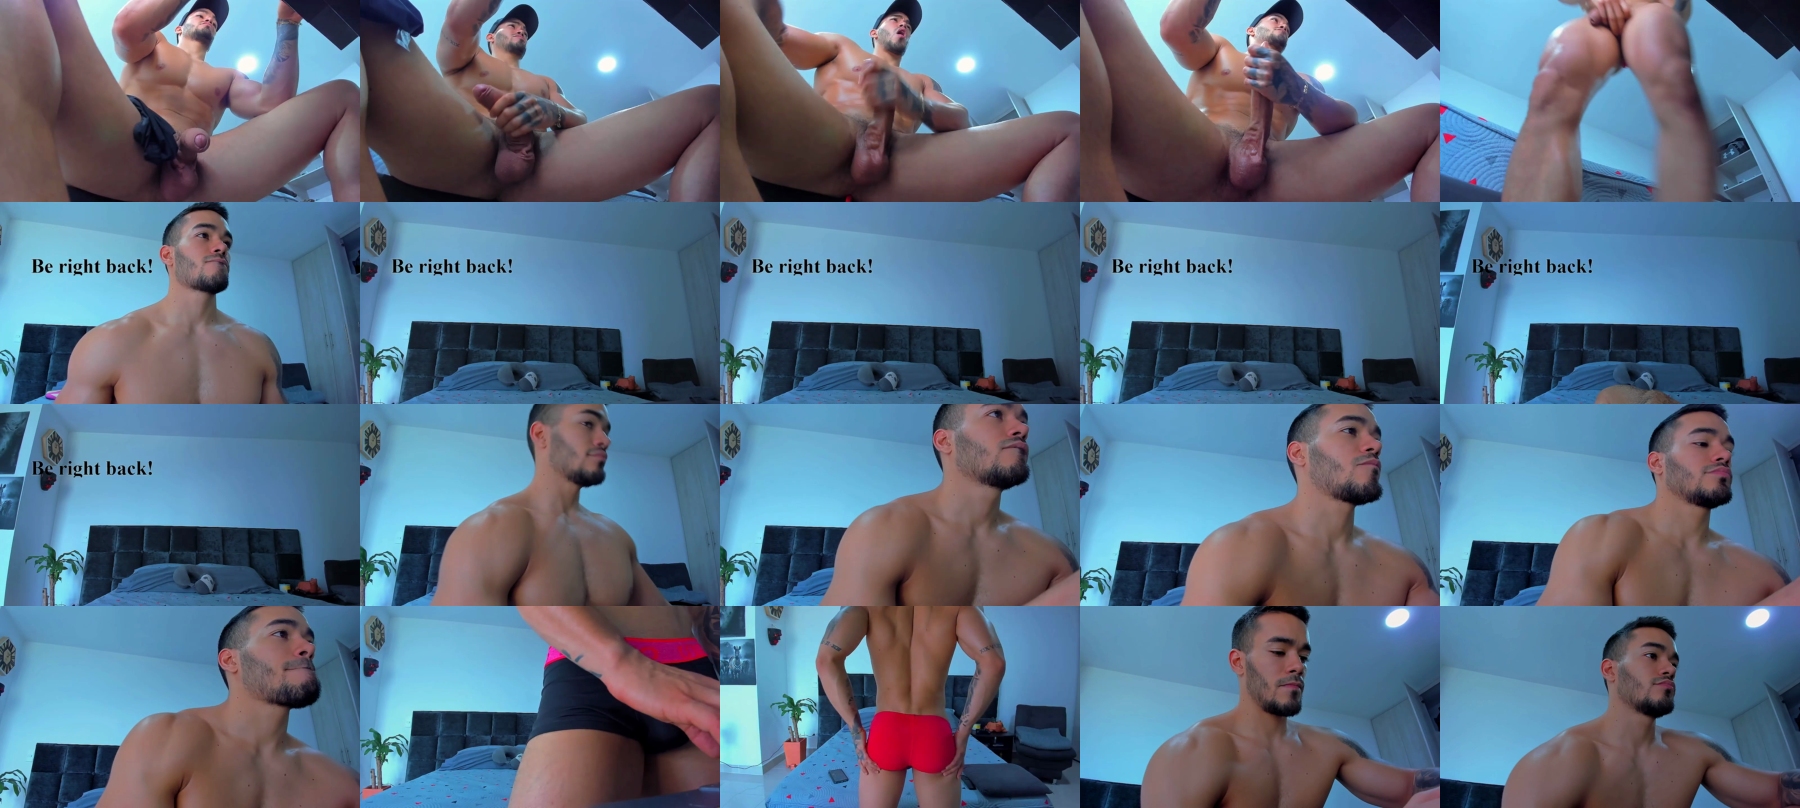 Alexander_Martines  20-09-2021 Male Webcam